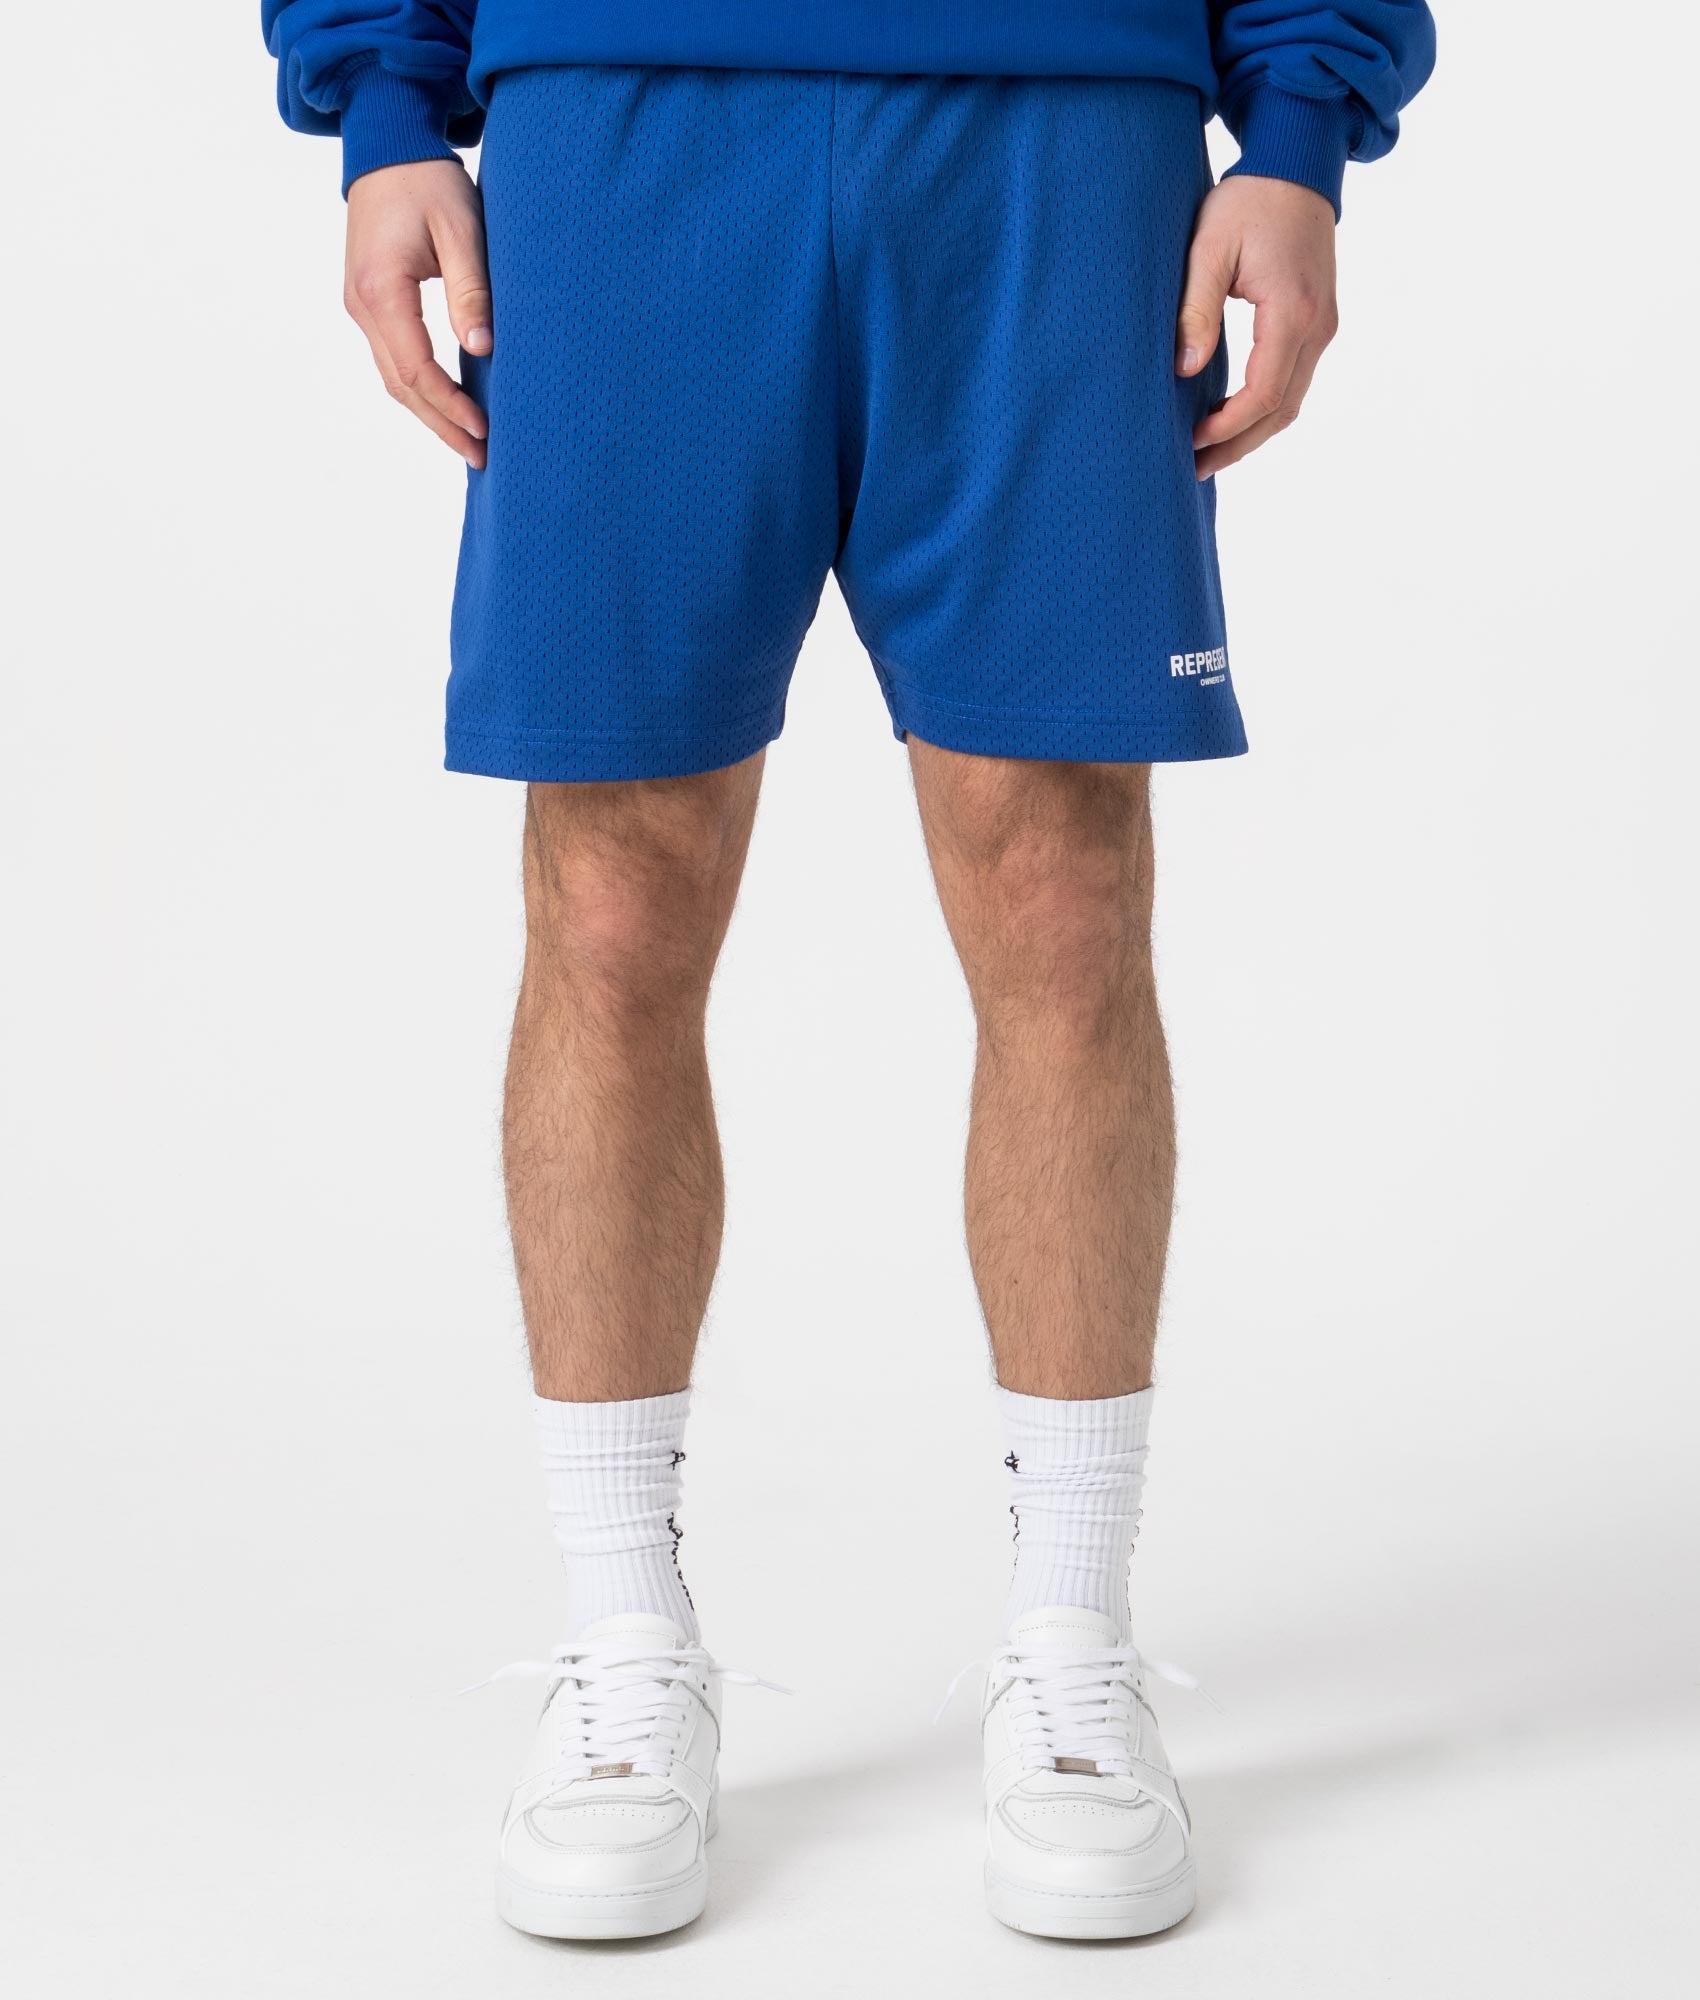 Represent Mens Represent Owners Club Mesh Shorts - Colour: 109 Cobalt Blue - Size: Small